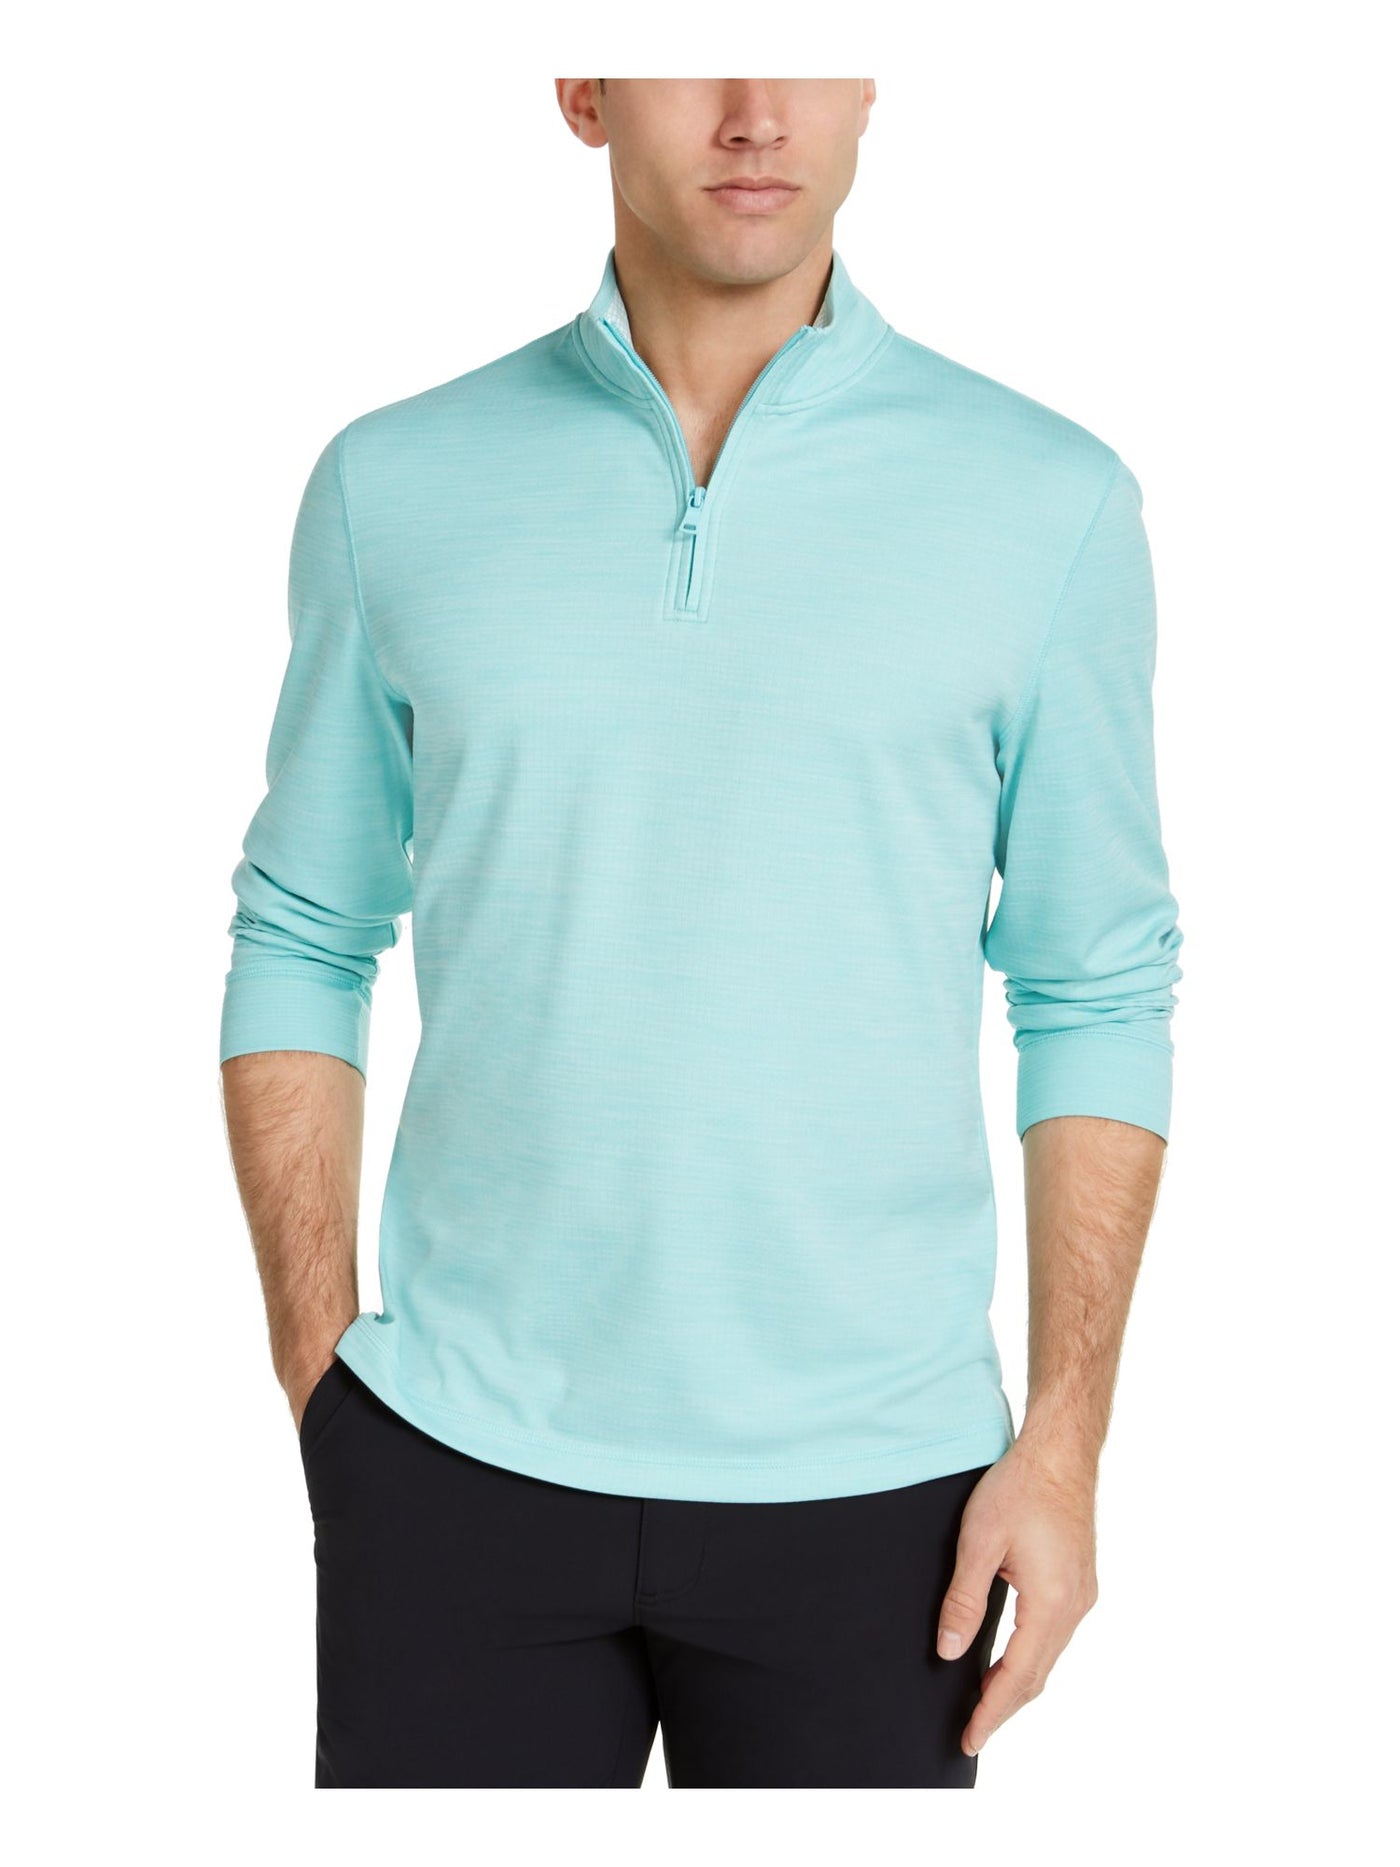 CLUBROOM Mens Turquoise Printed Mock Neck Classic Fit Quarter-Zip Moisture Wicking Sweatshirt L